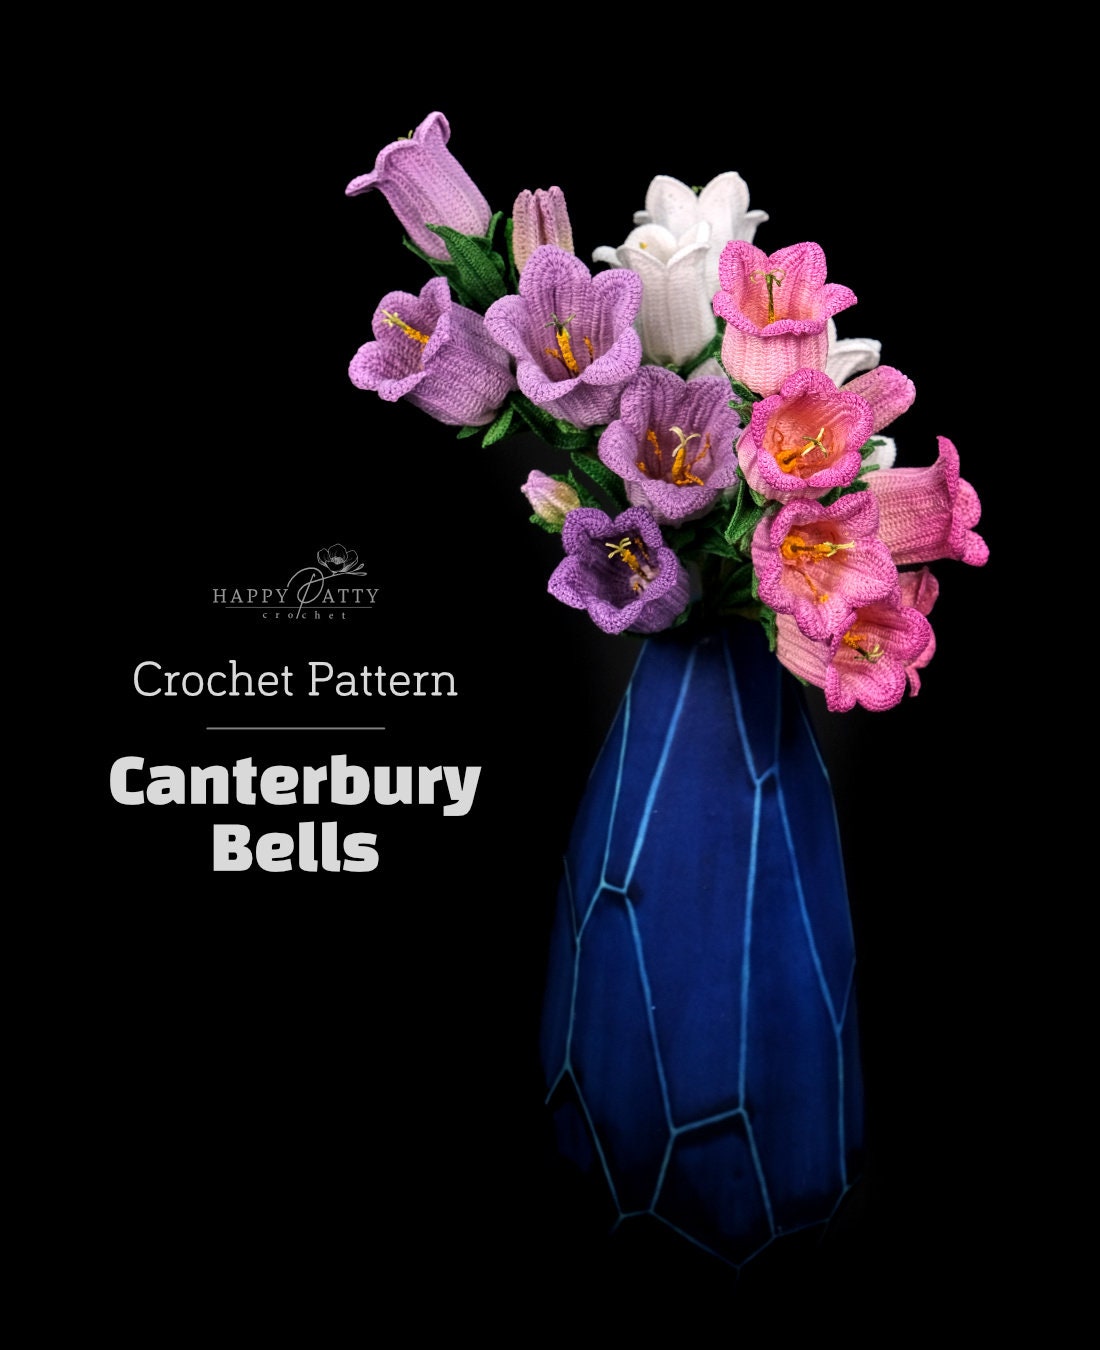 Crochet Canterbury Bells Flower Pattern - Crochet Pattern for Crochet Bellflowers (Campanula Medium)